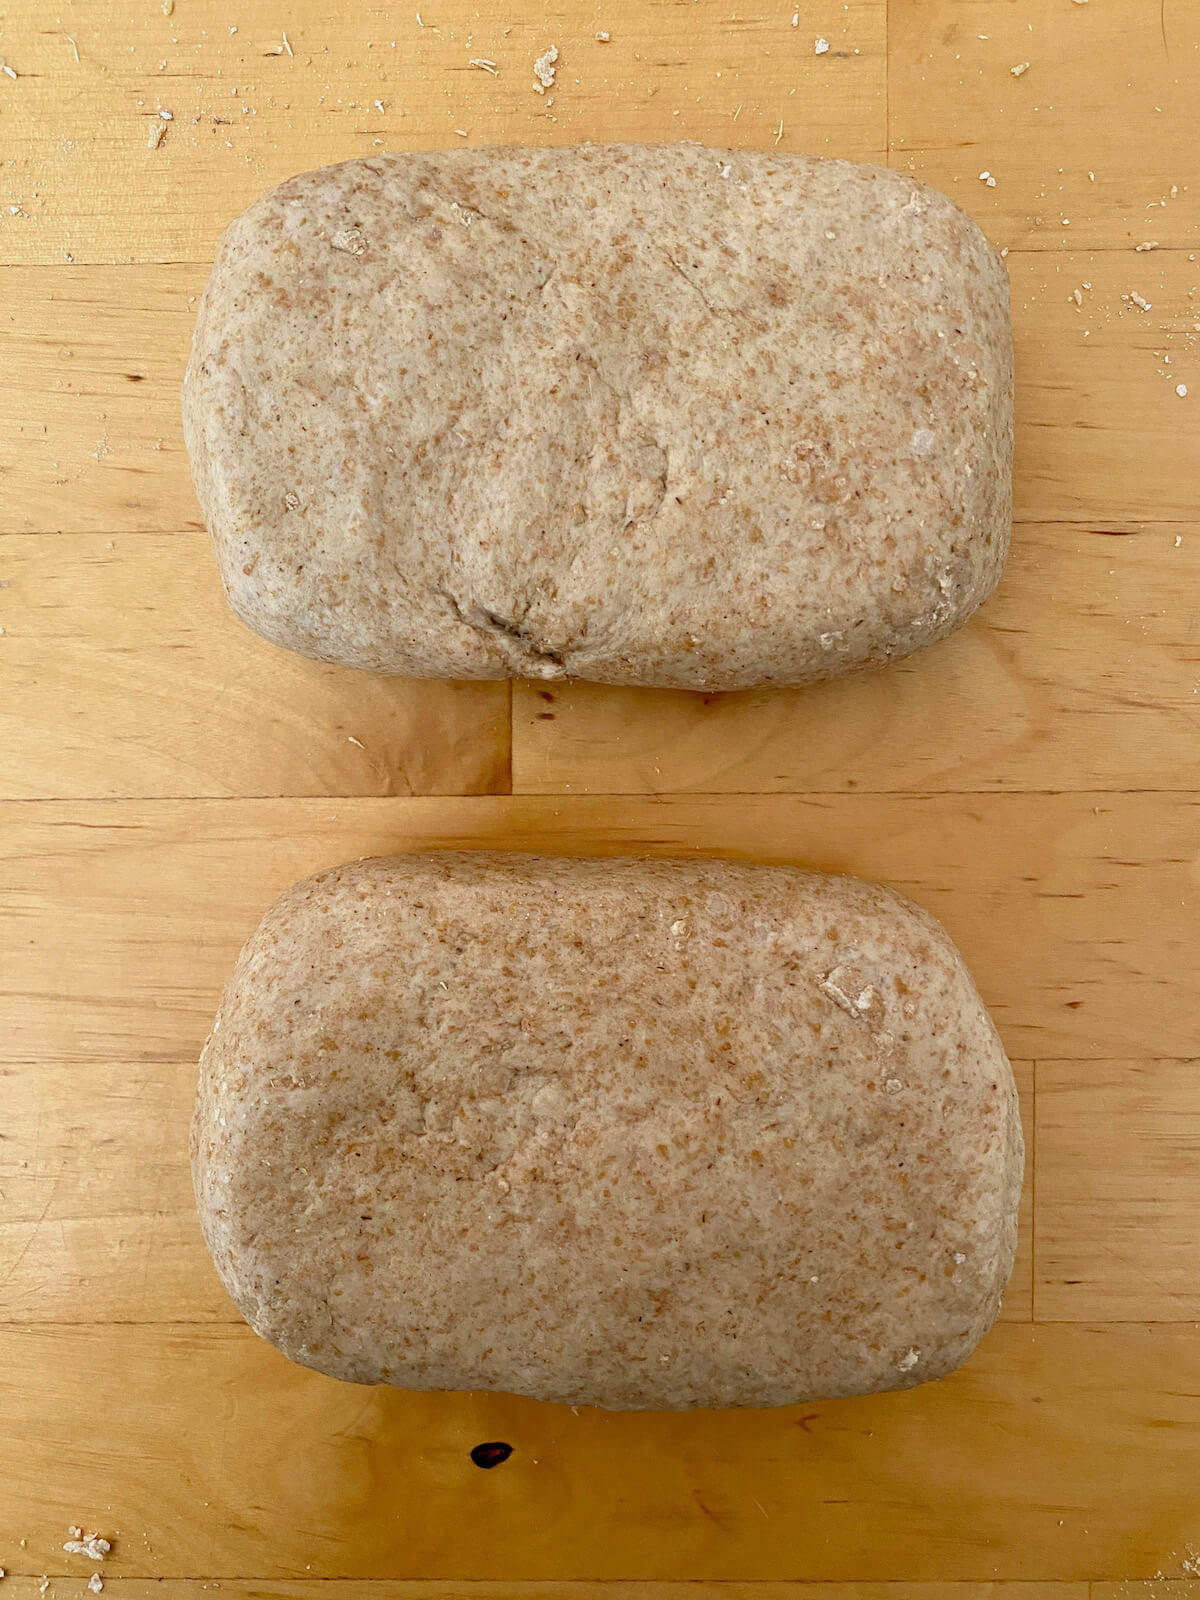 Two pieces of sourdough cracker dough shaped into rectangles on a butcher block countertop.